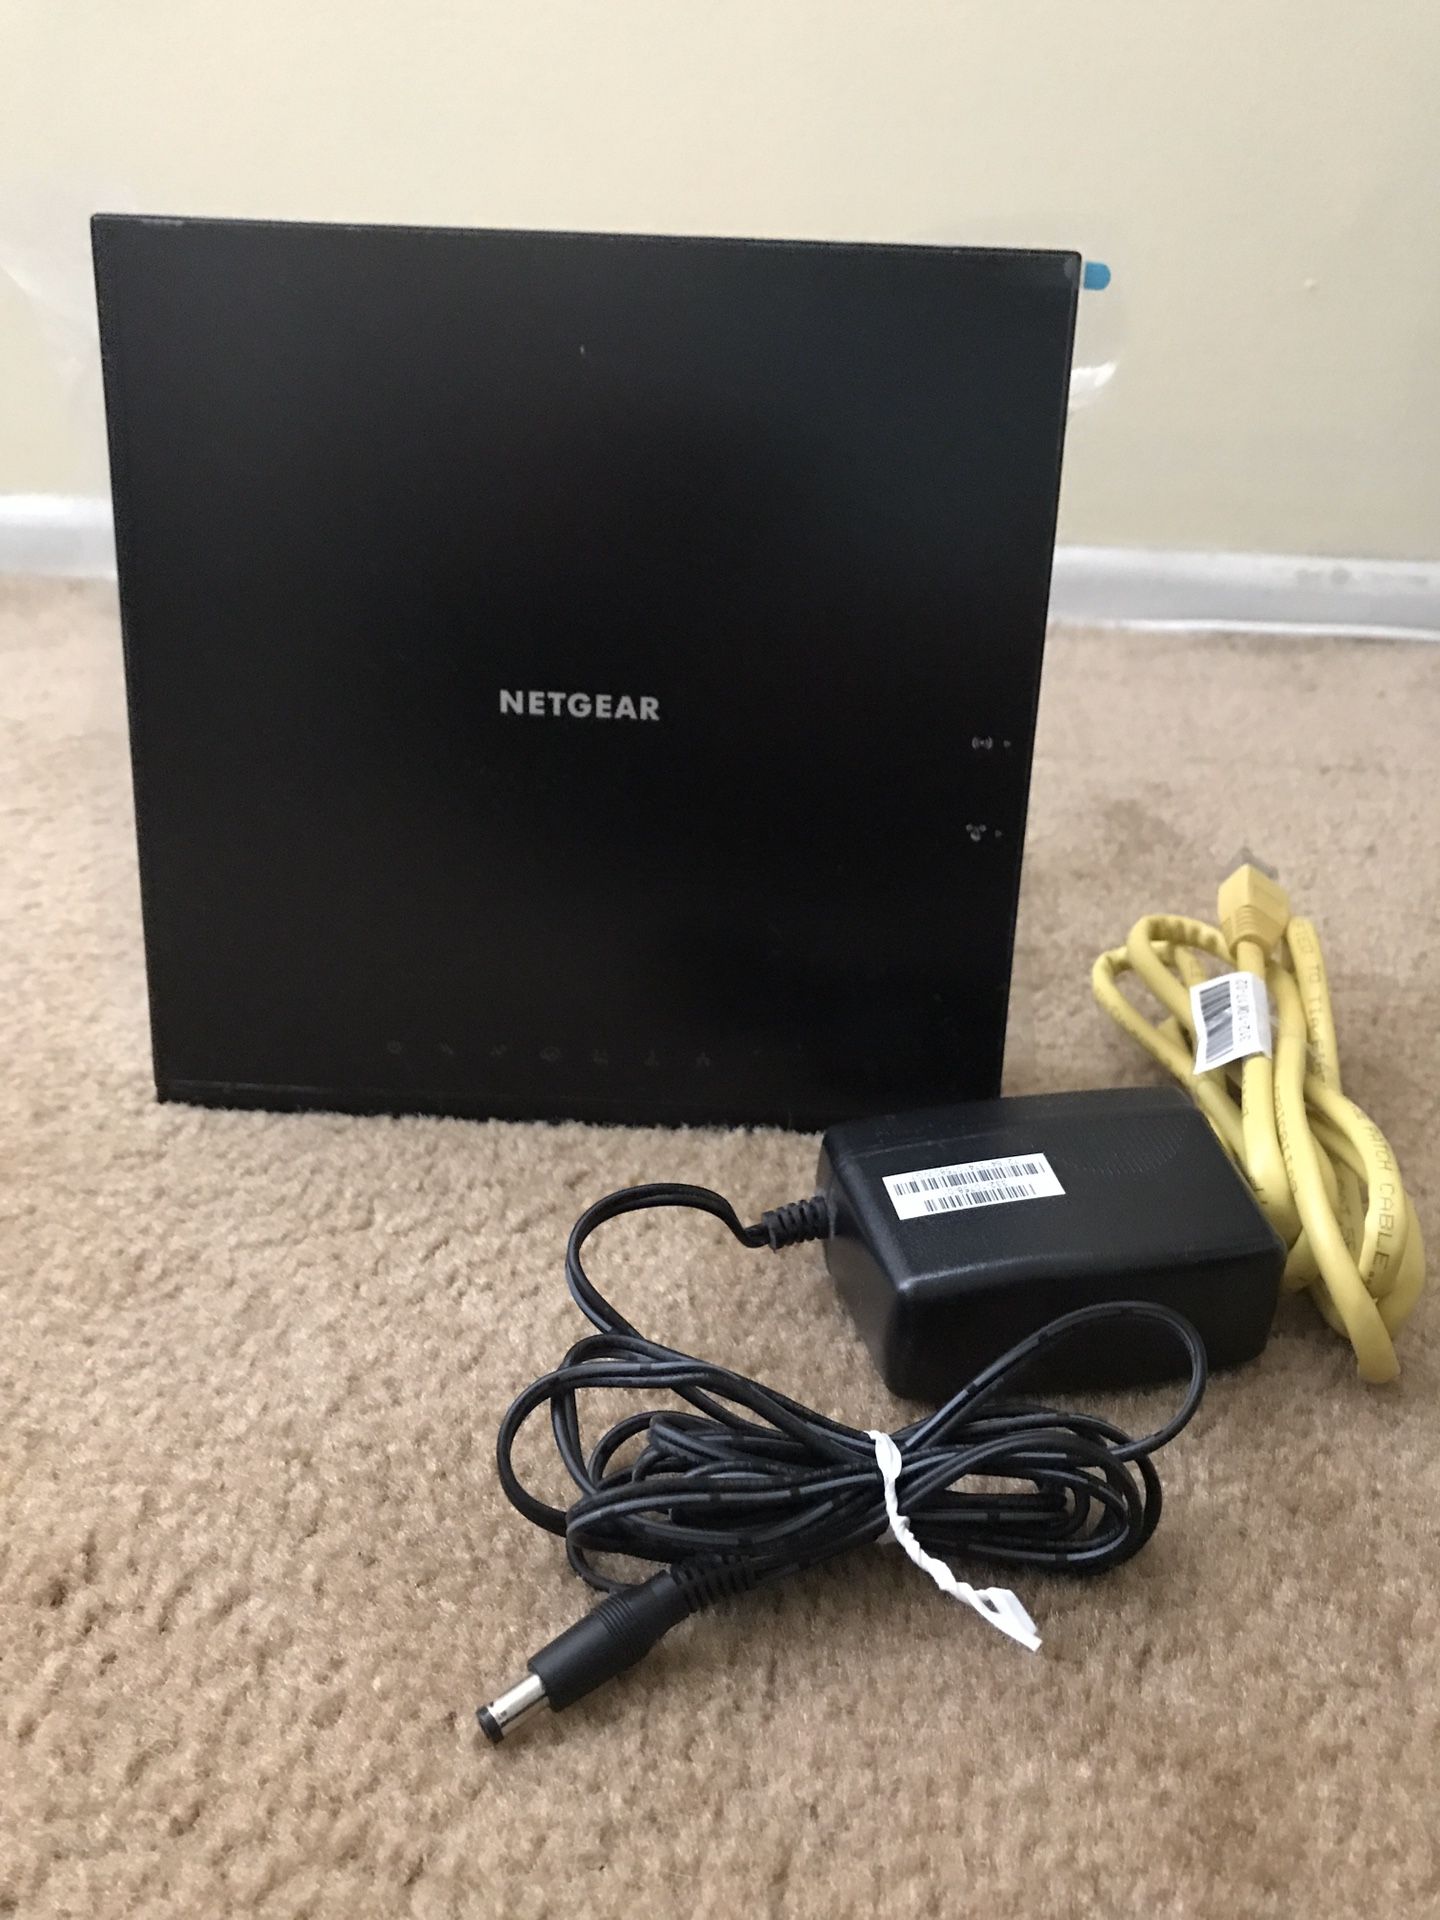 Netgear AC1600 WiFi Cable Modem Router